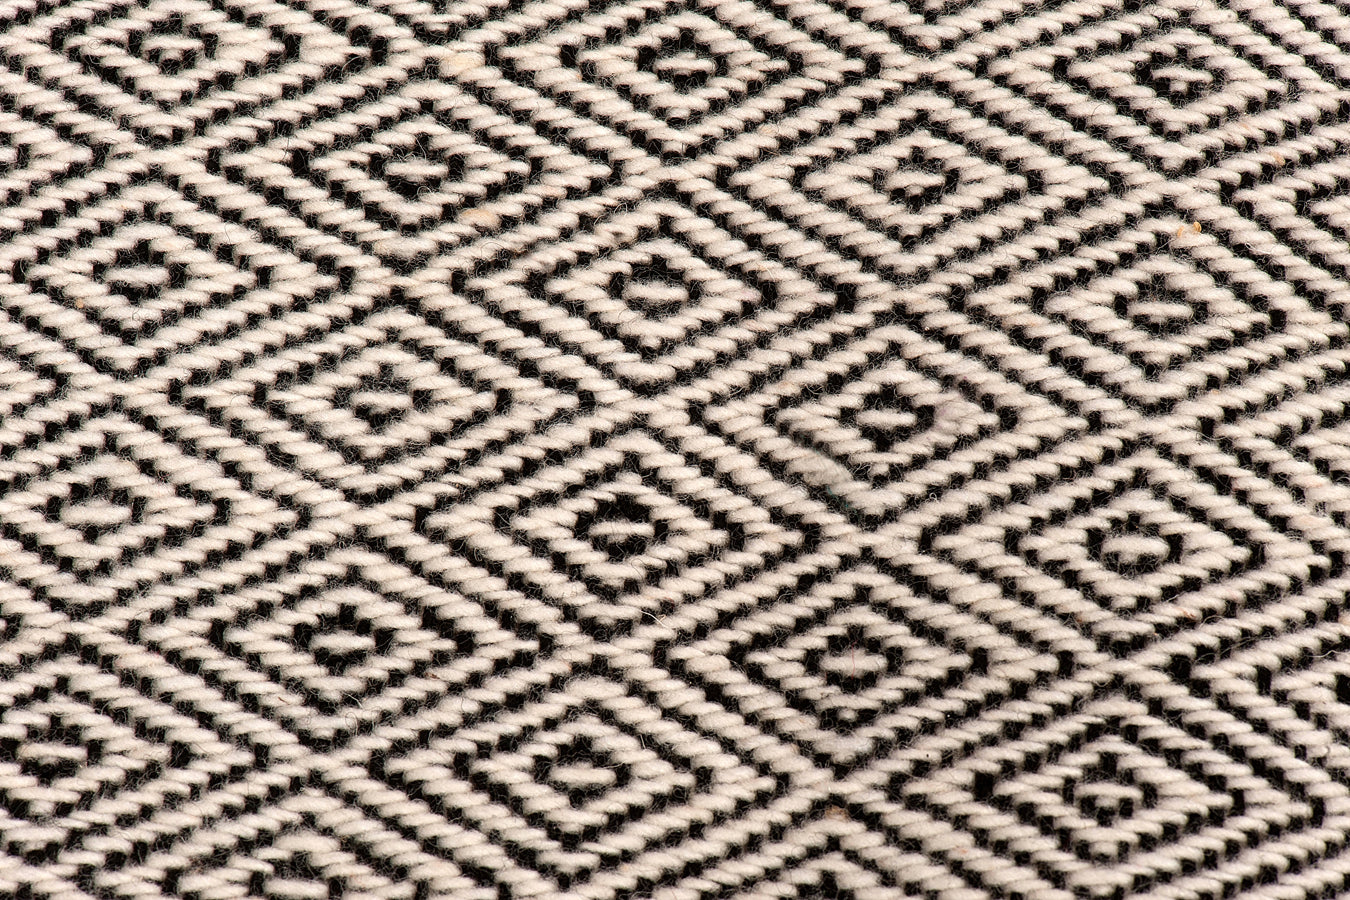 Rombo Wool Rug Aztec - Southwestern - Ethnic Design - Black and White diamond design - Small rug